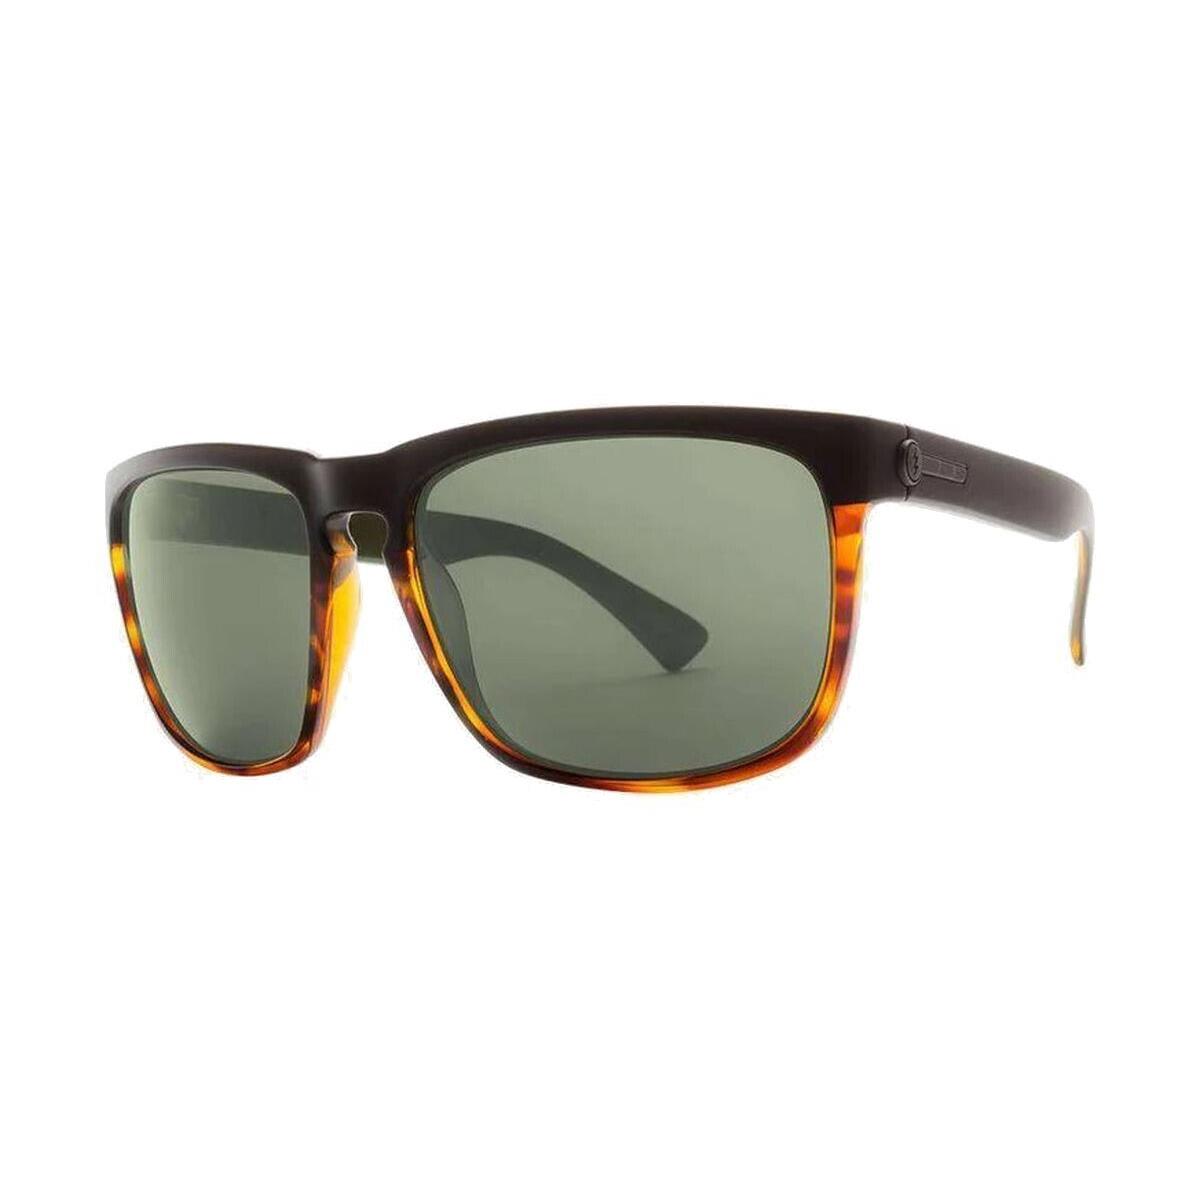 Electric Knoxville XL Sunglasses Darkside Tortoise with Grey Polarized Lens - Black Tortoise Frame, Grey Polarized Lens